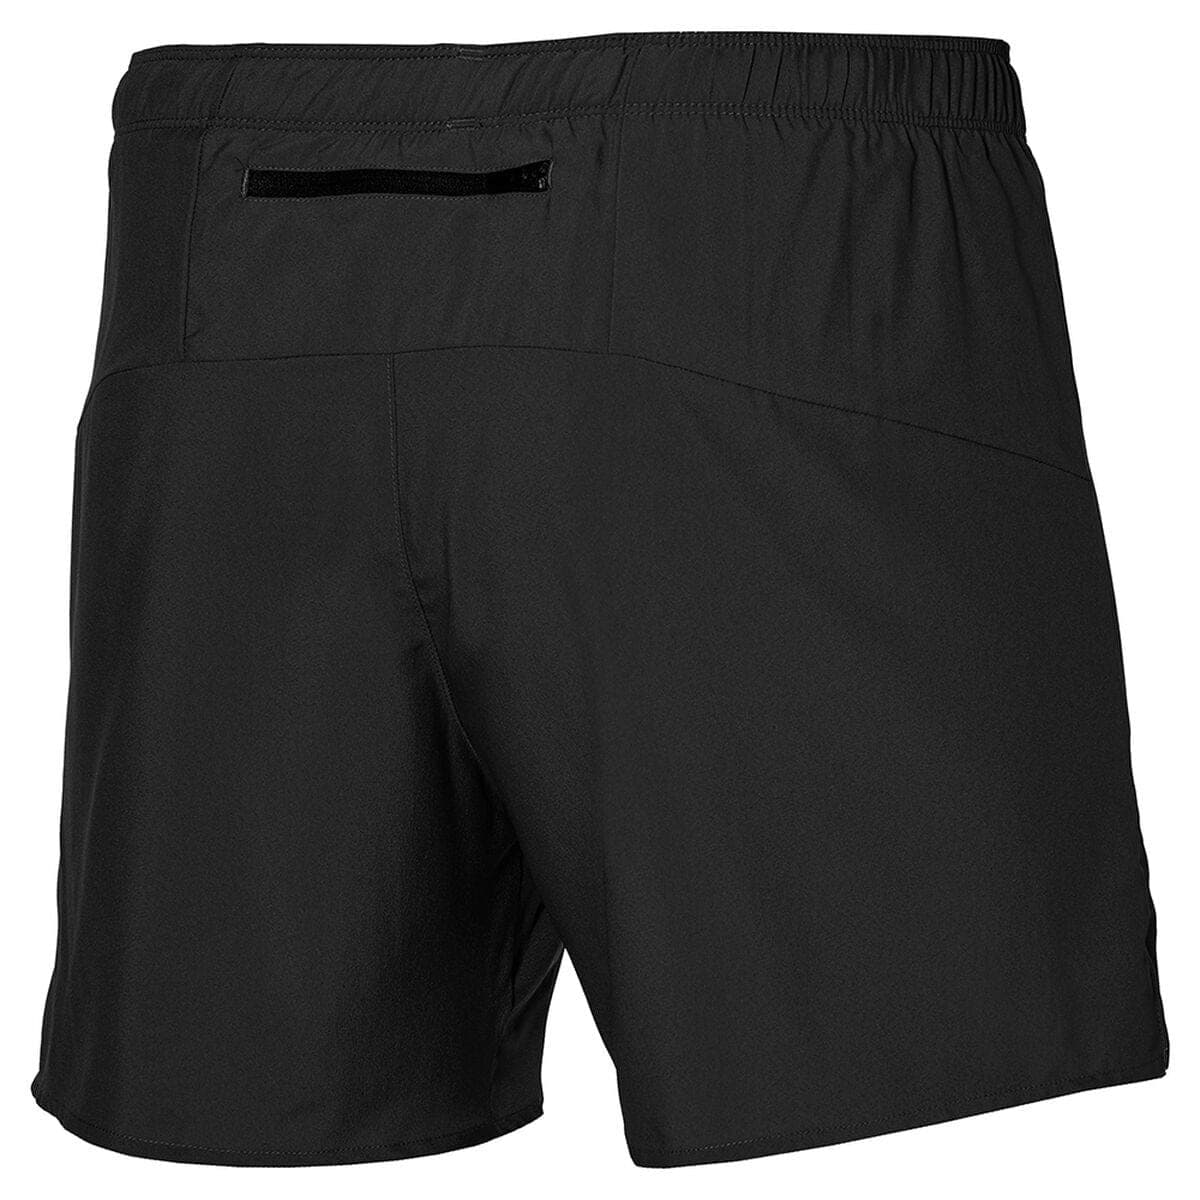 Mizuno Core 5.5 inch Short (Men's) - Black